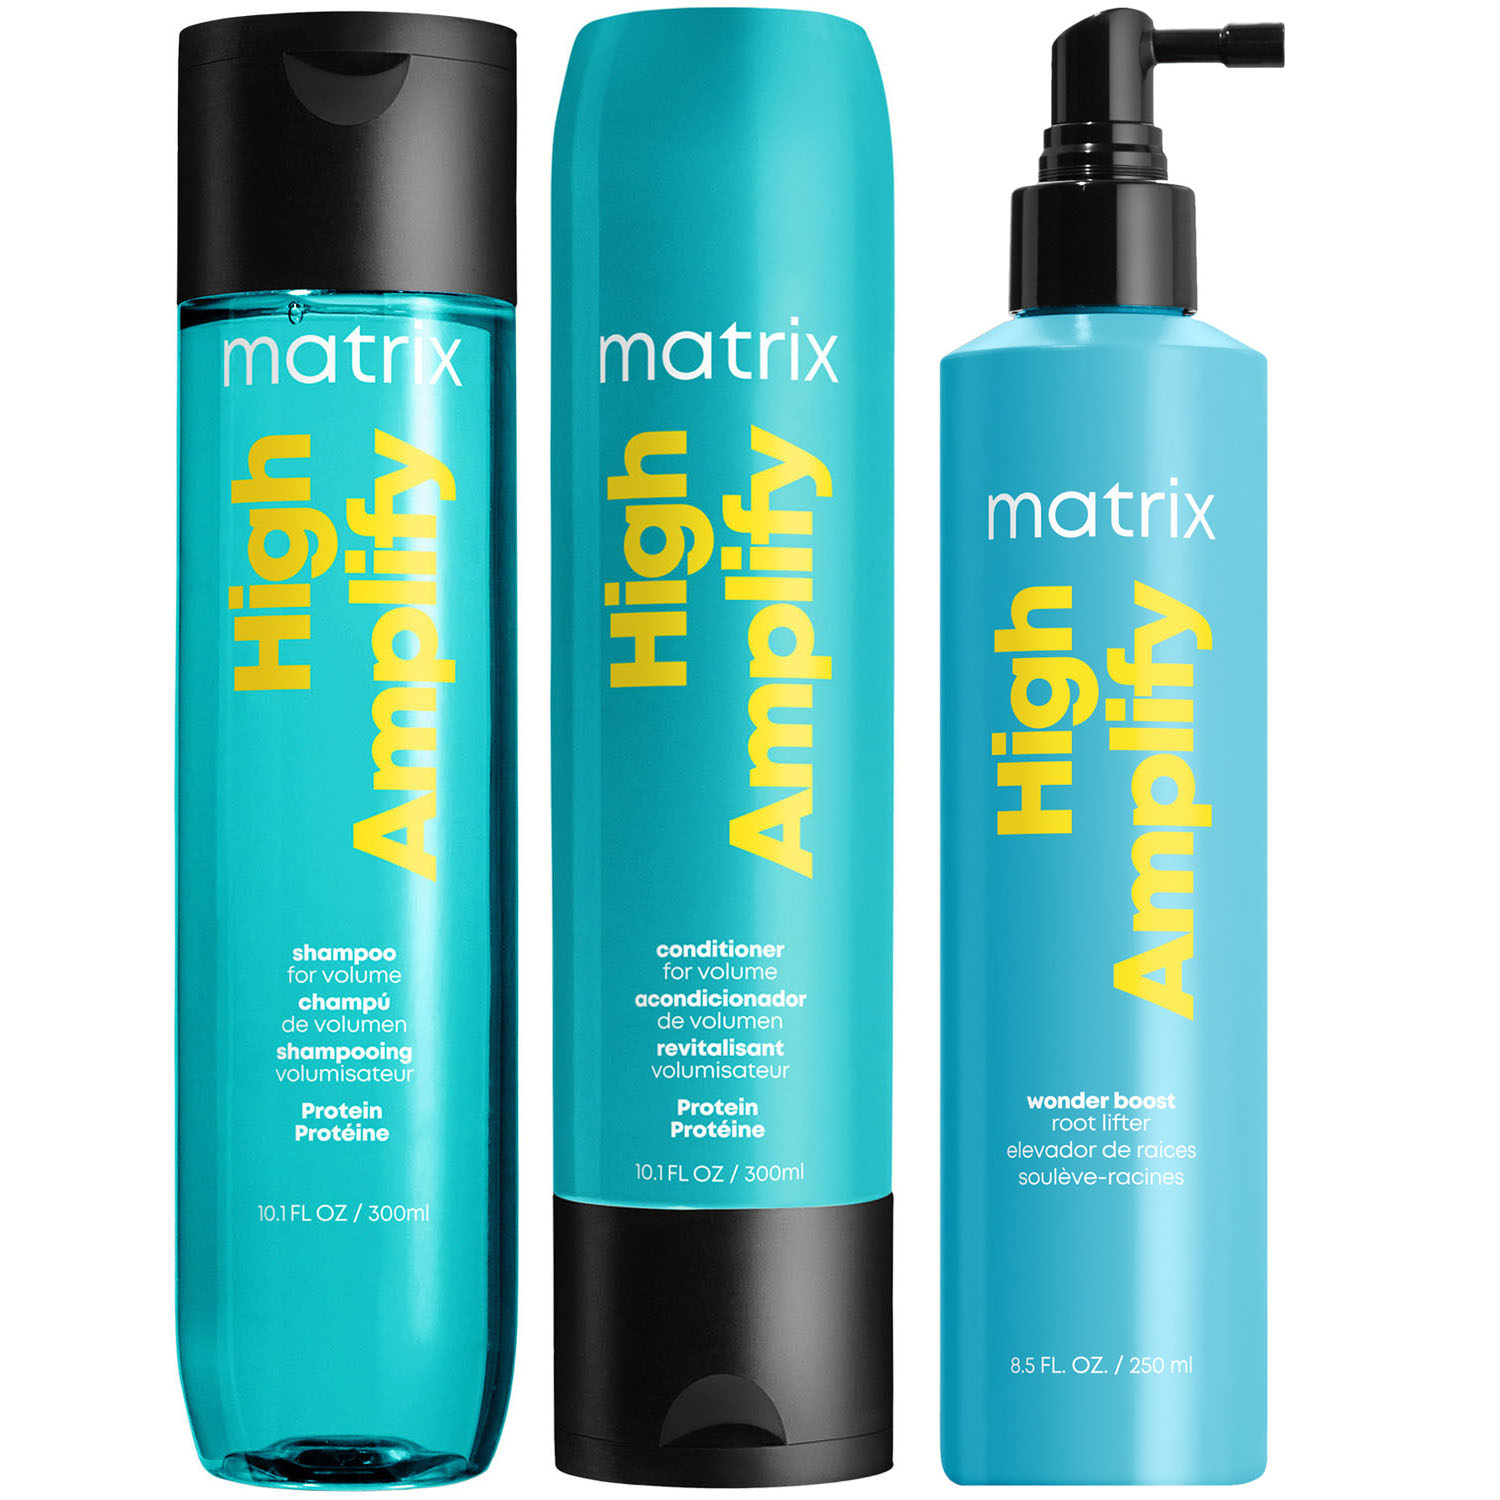 Matrix Набор для объема волос: шампунь 300 мл + кондиционер 300 мл + спрей 250 мл (Matrix, Total results) matrix средство для прикорневого объема волос wonder boost 250 мл